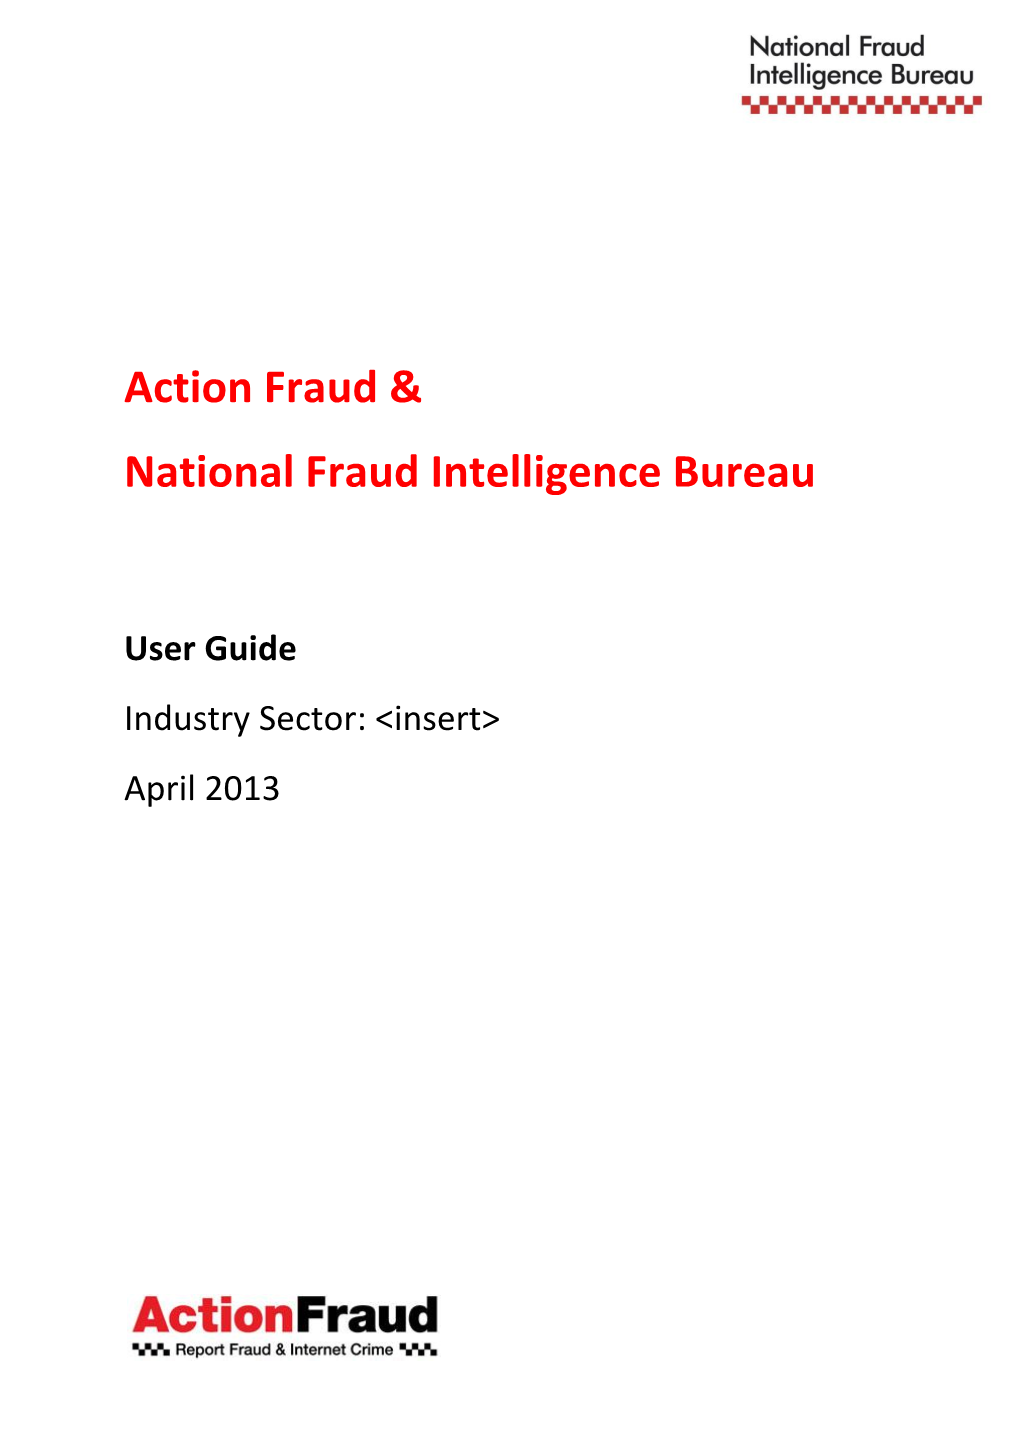 Action Fraud & National Fraud Intelligence Bureau